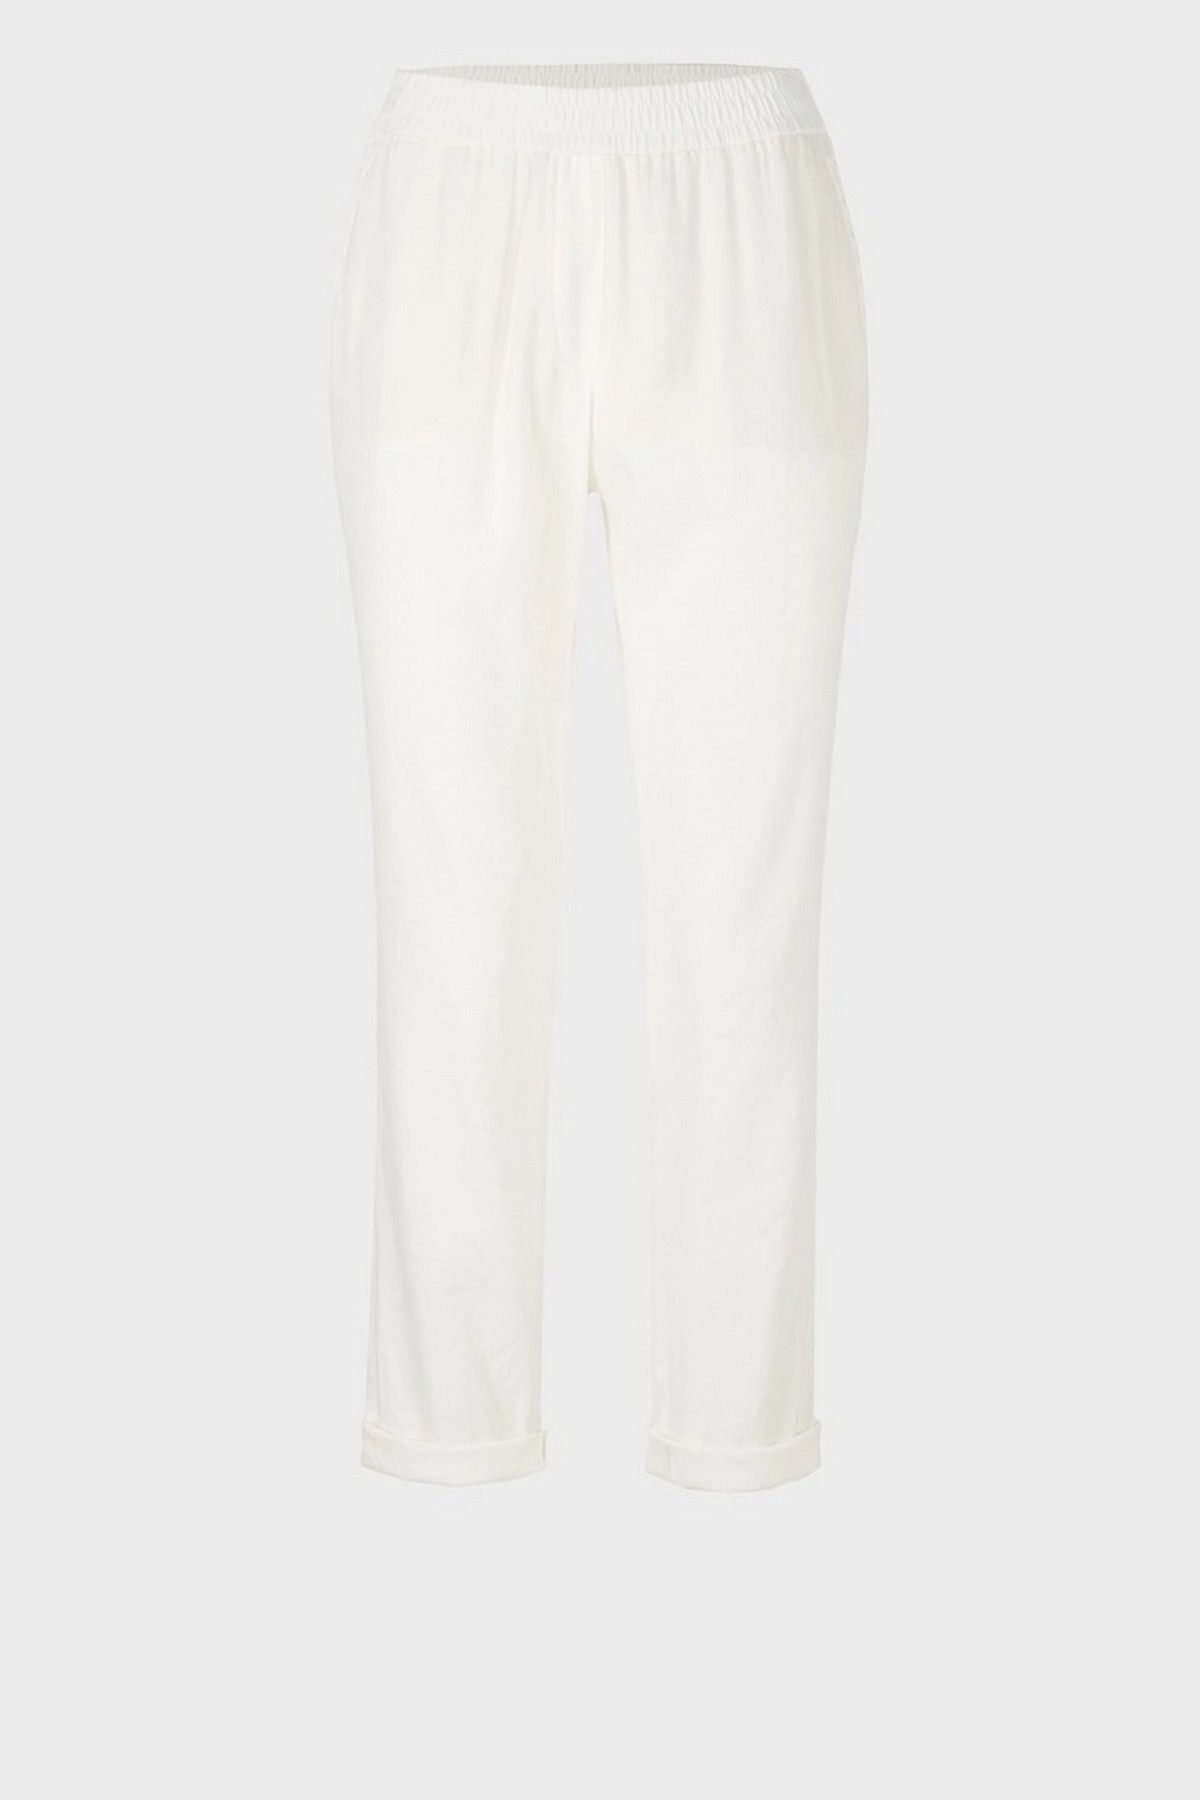 Linnen pantalon joggingband in de kleur off white van het merk Marc Cain Collections